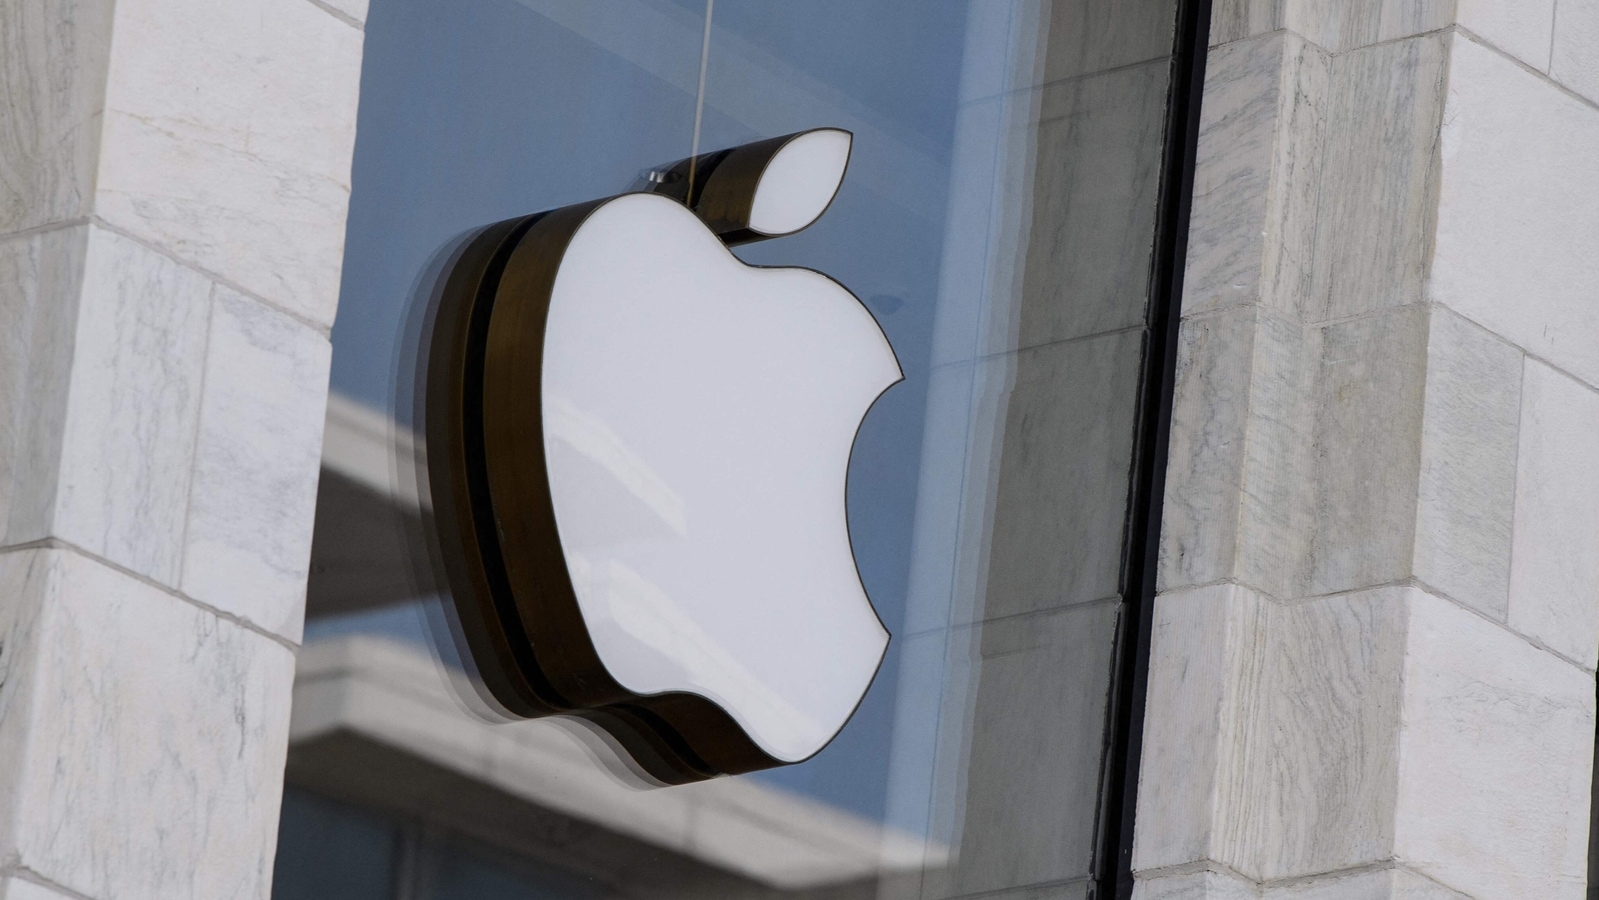 Arvind Kejriwal’s Iphone vs ED: 3 intervals Apple refused to unlock iPhones for govt